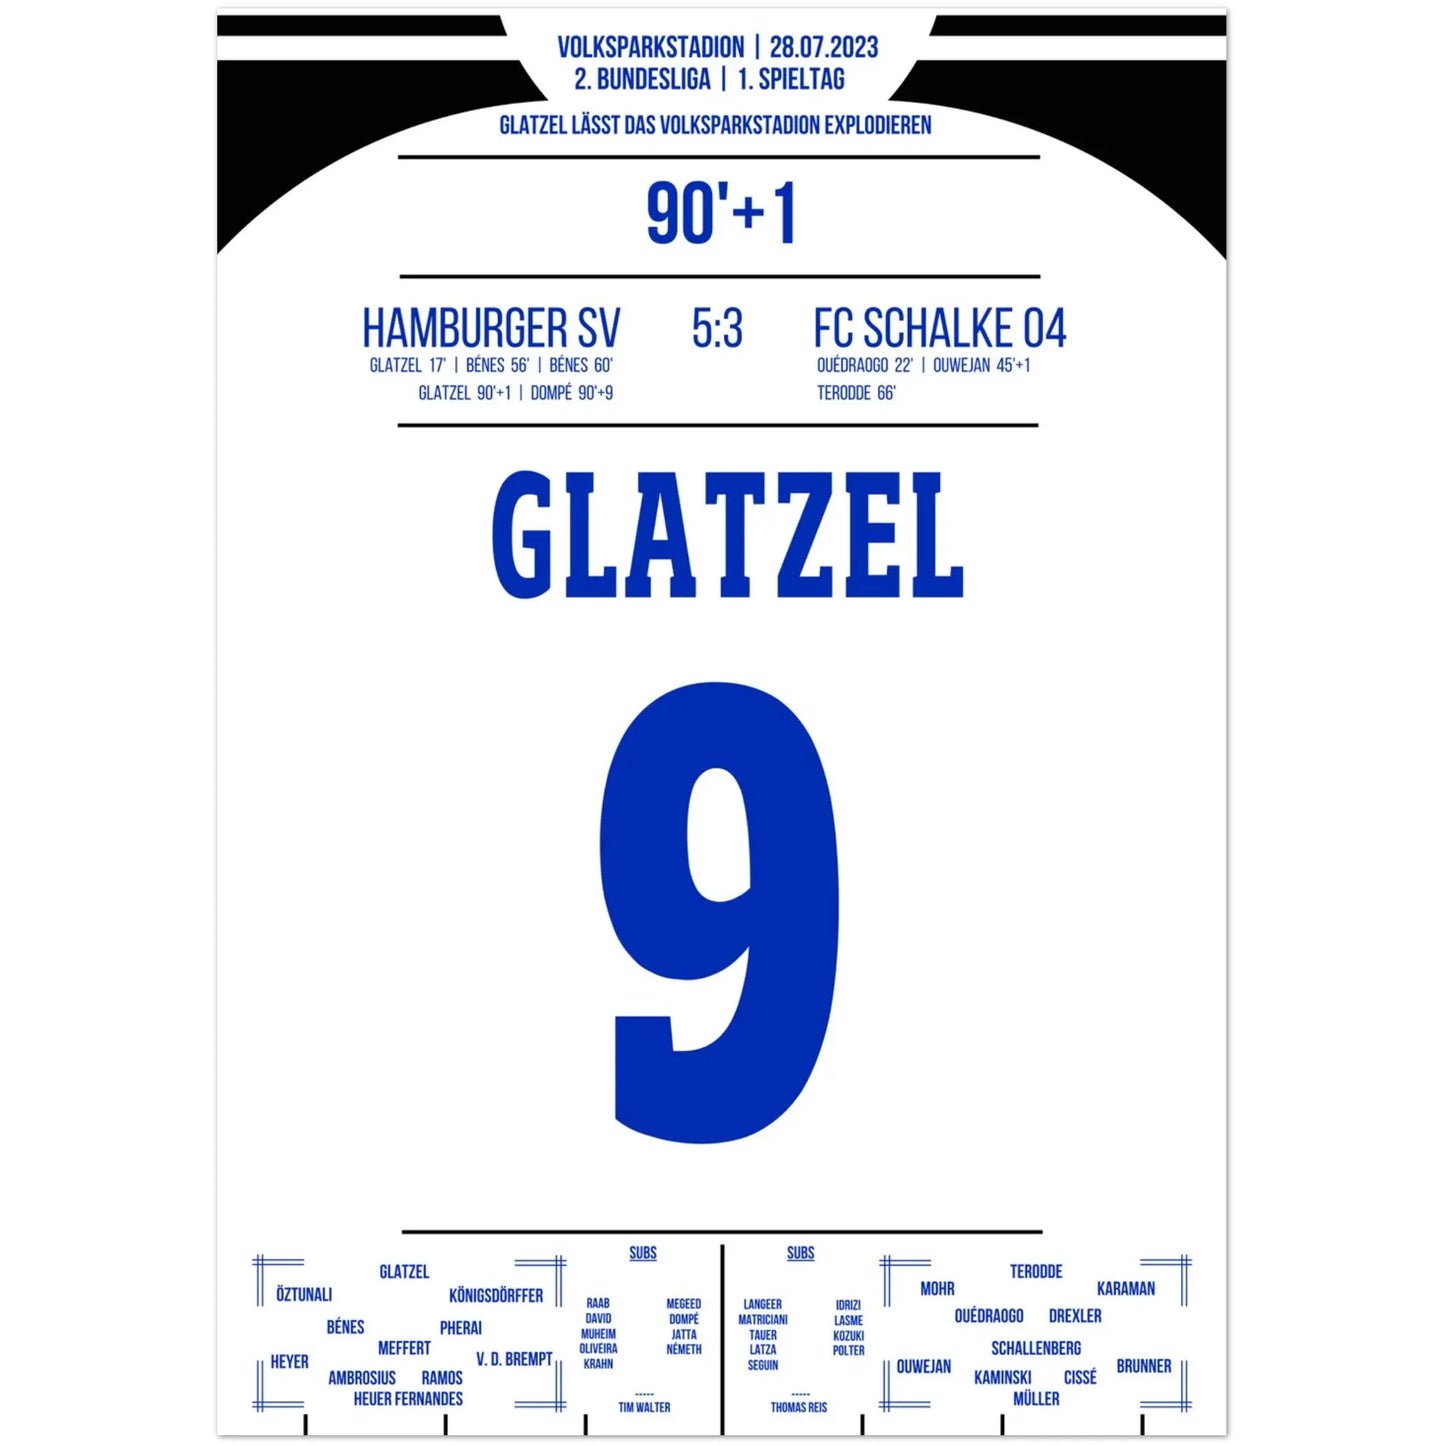 Glatzel goal in injury time to win the season opener in 2023